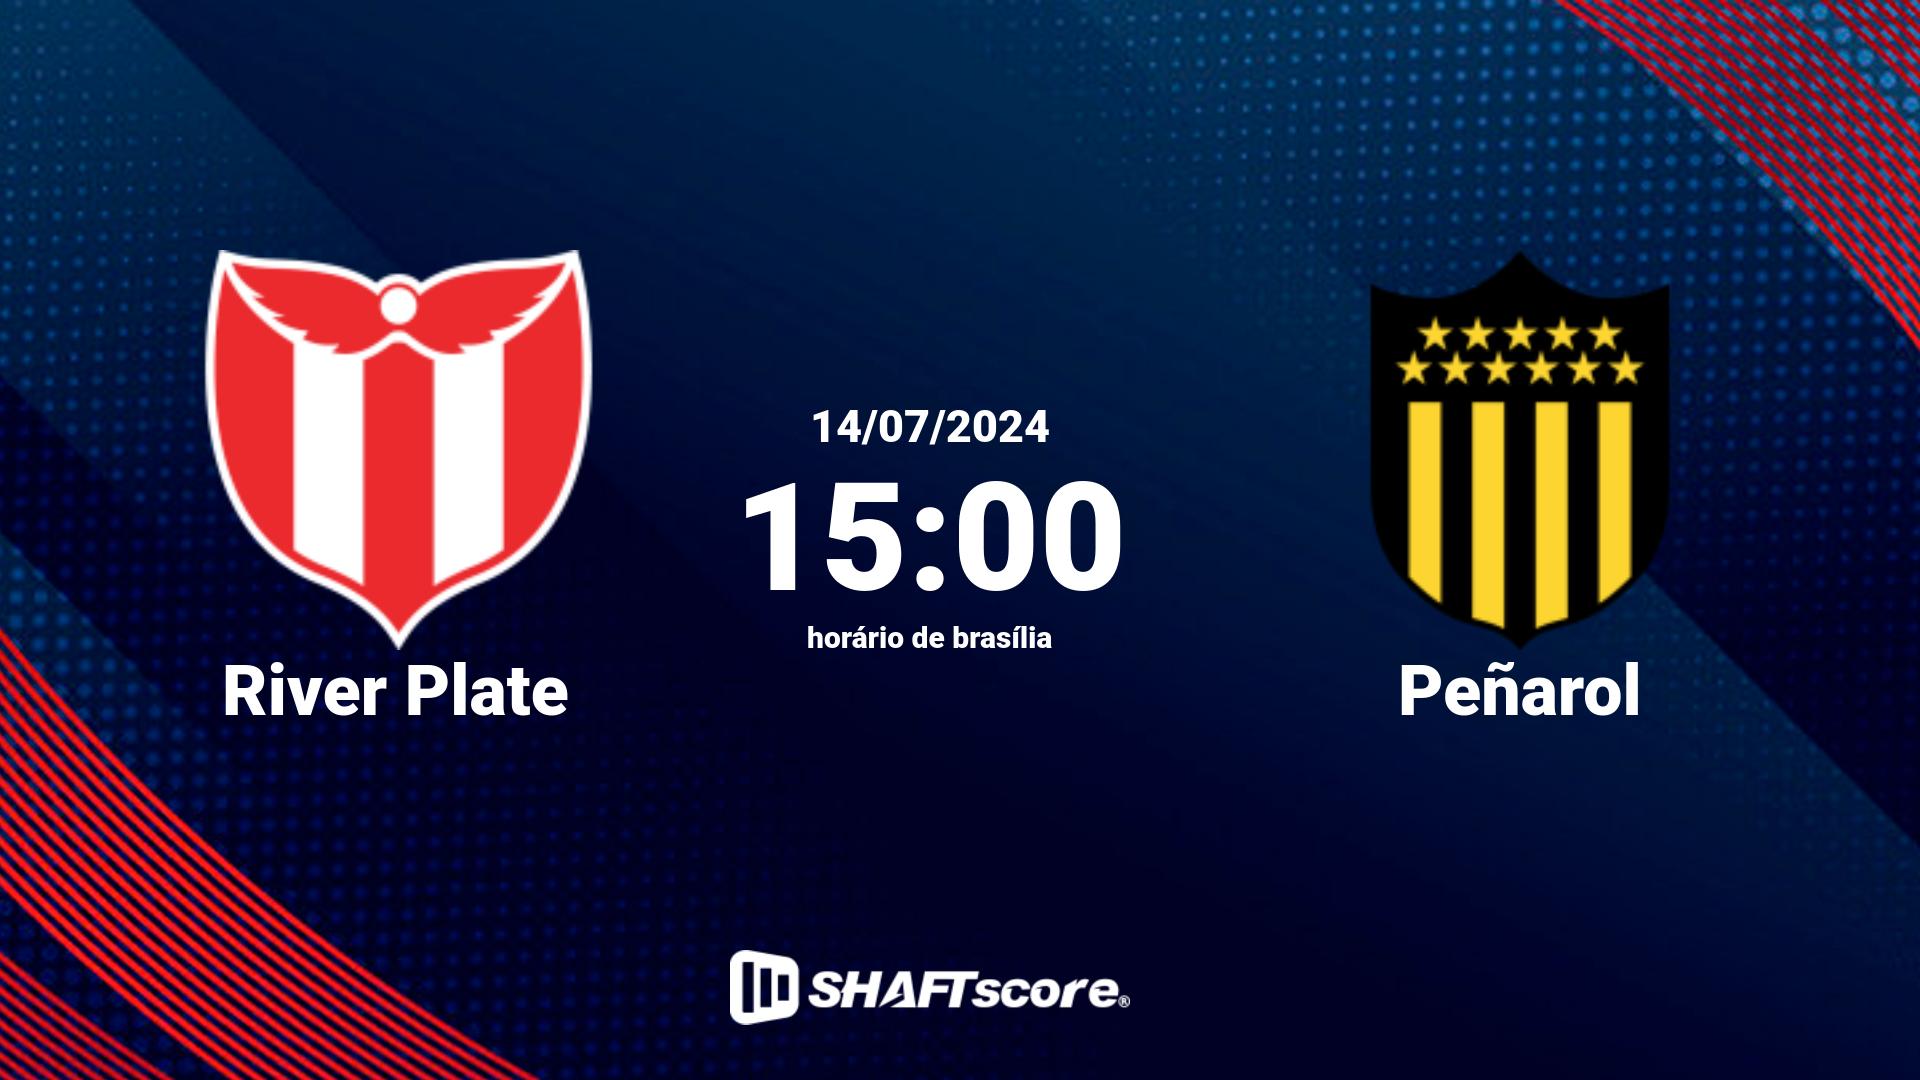 Estatísticas do jogo River Plate vs Peñarol 14.07 15:00